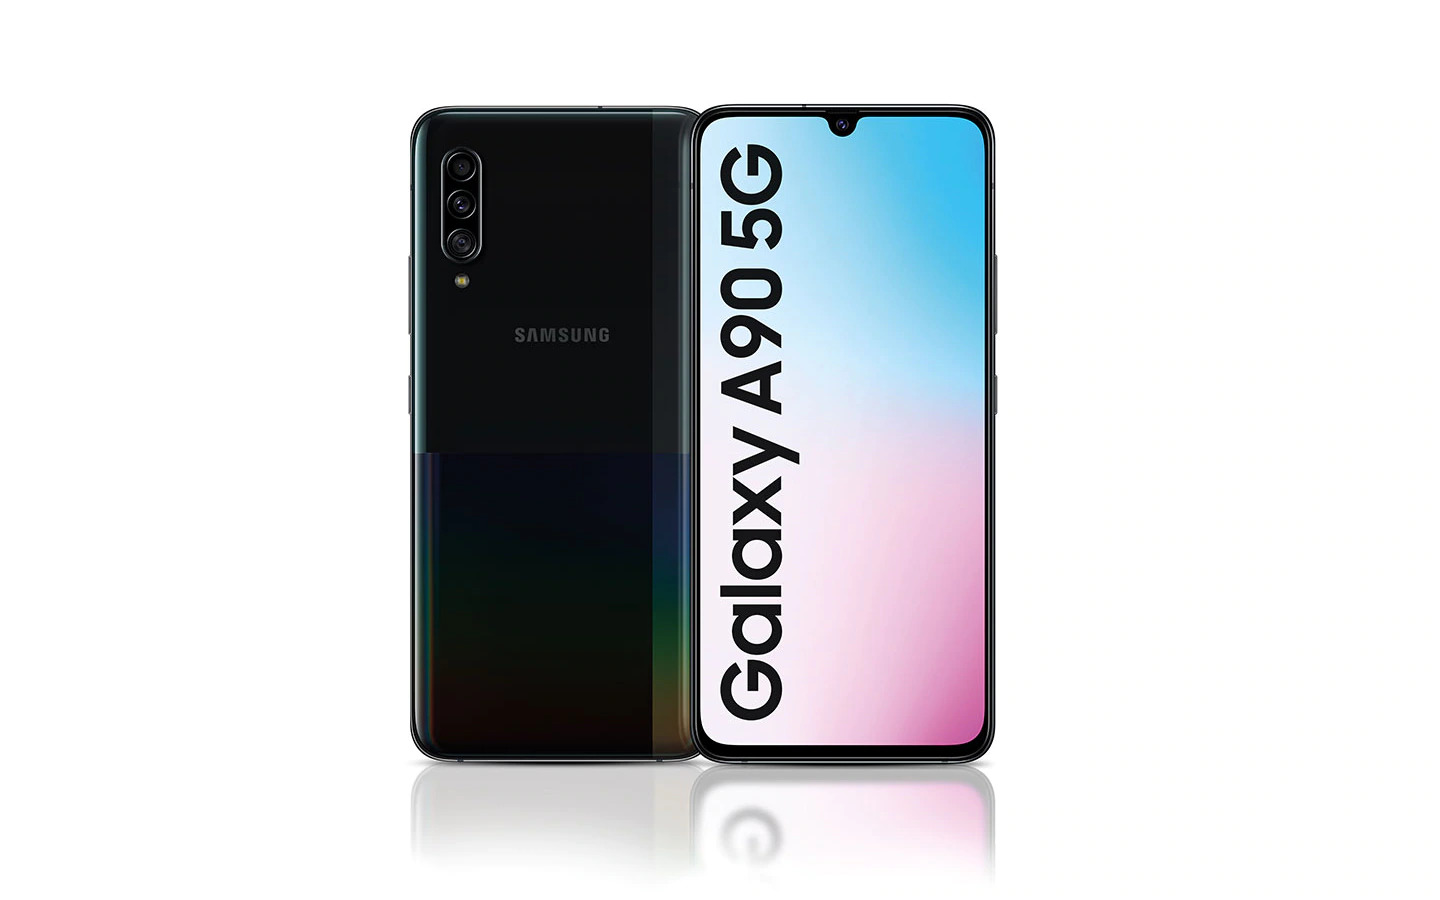 https://www.gizmochina.com/wp-content/uploads/2020/05/Samsung-Galaxy-A90-5G-Featured.jpg